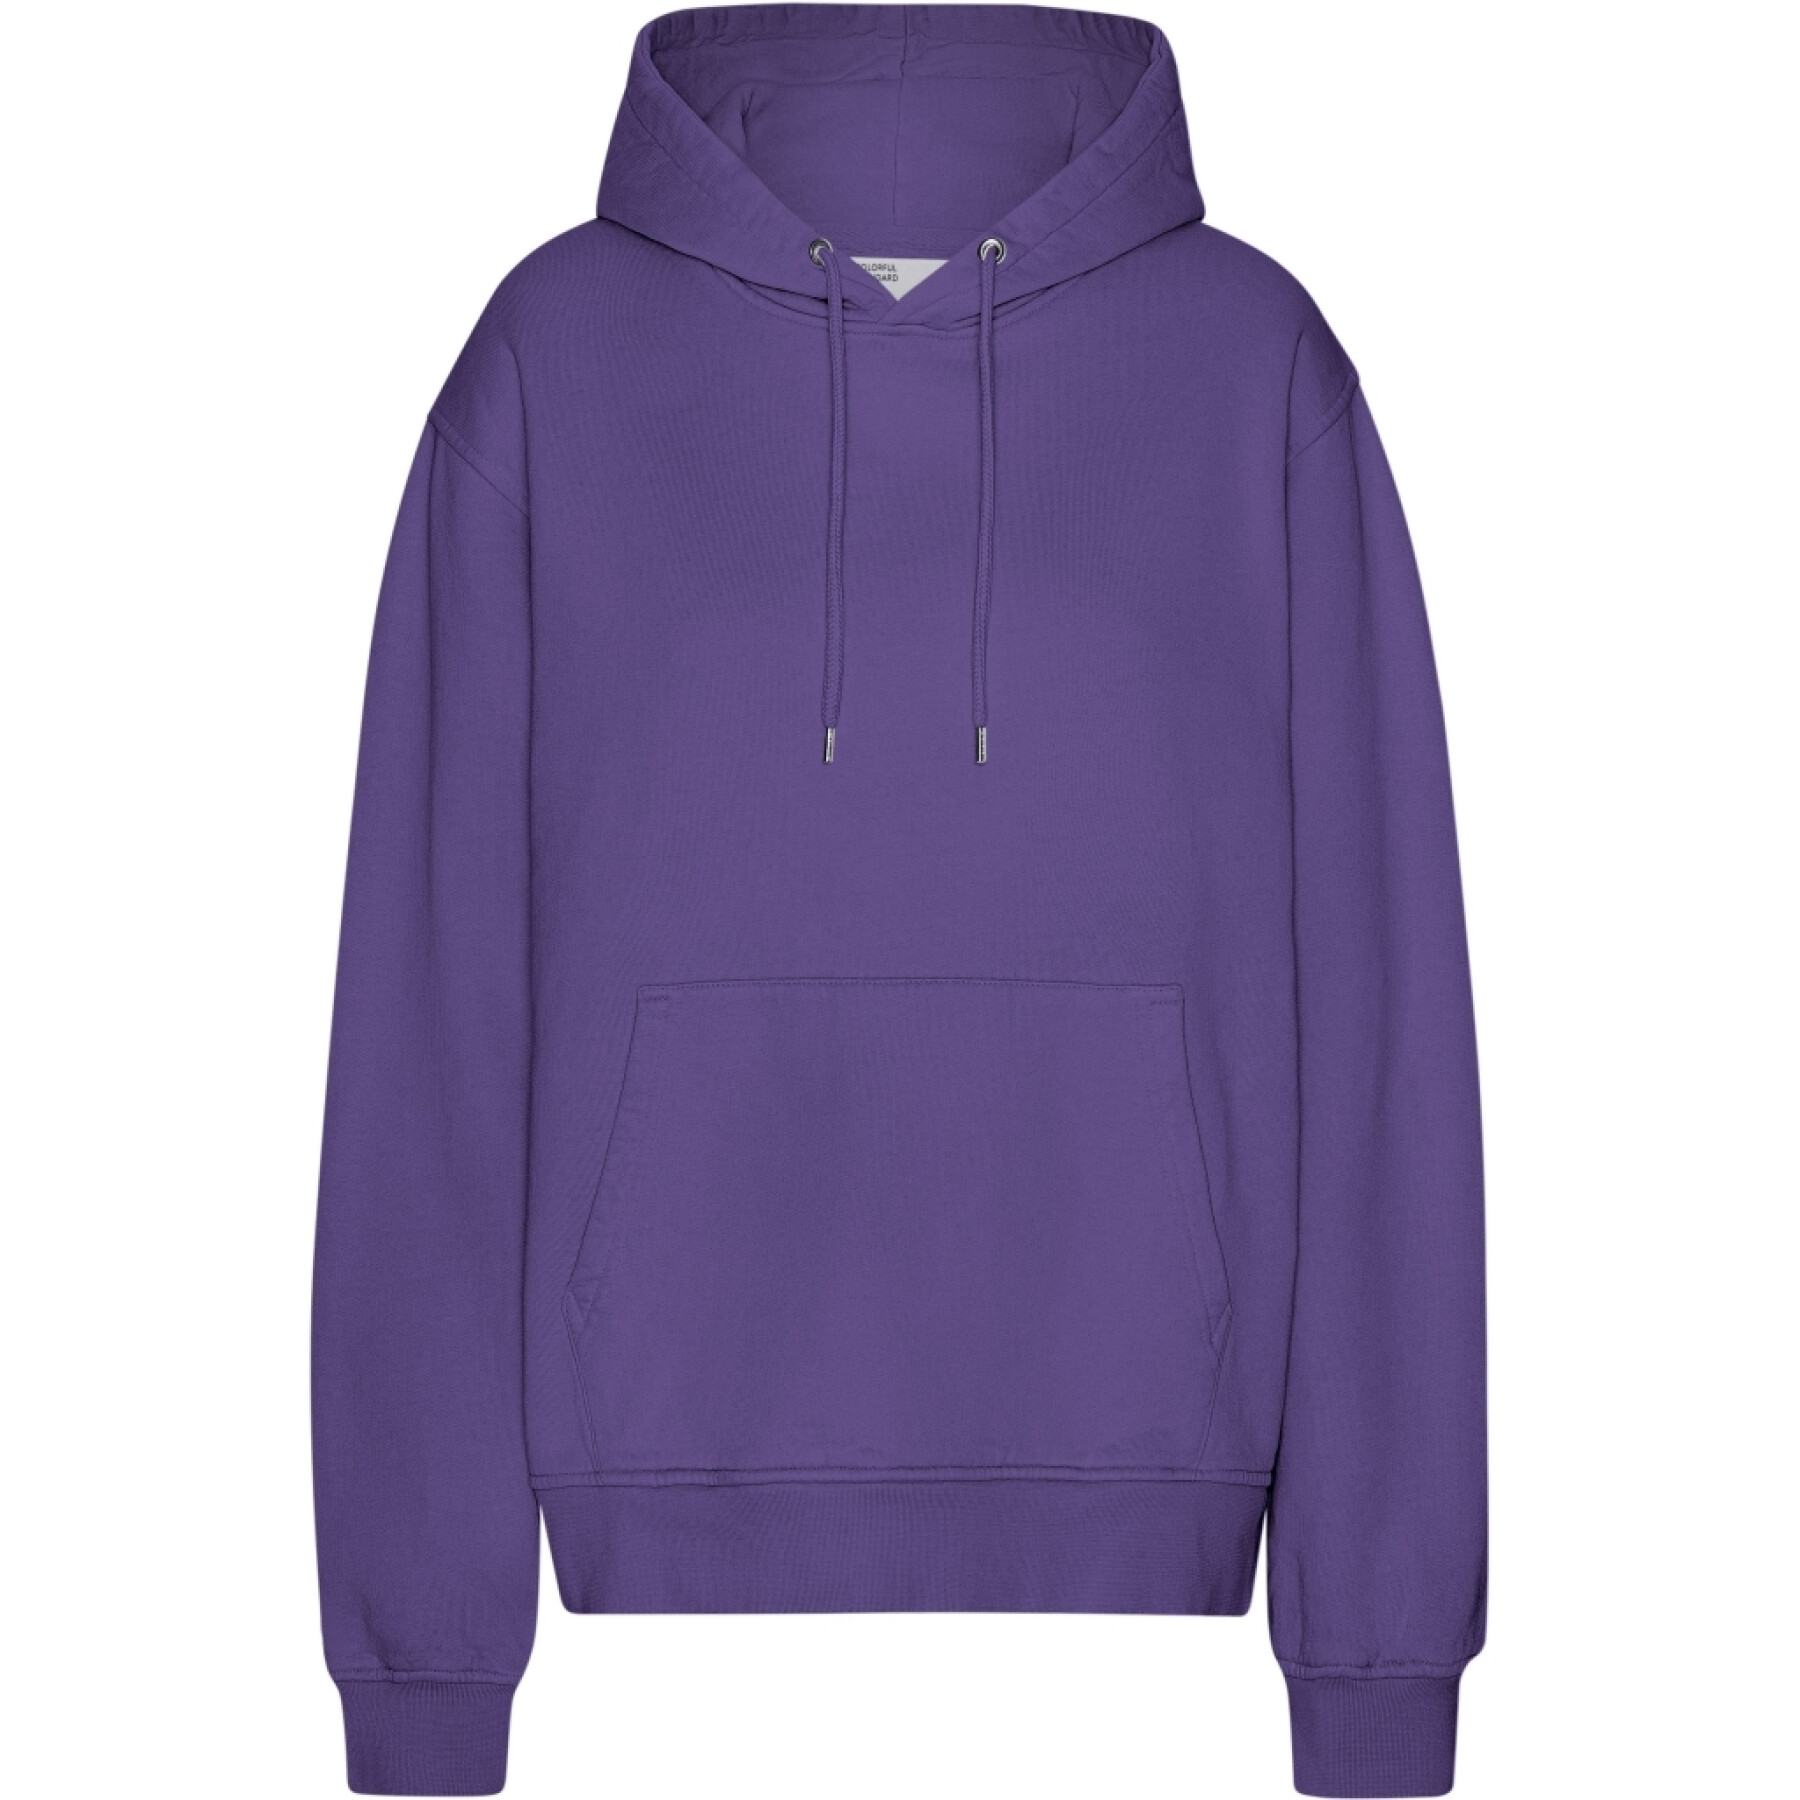 Sweatshirt à capuche Colorful Standard Classic Organic Ultra Violet